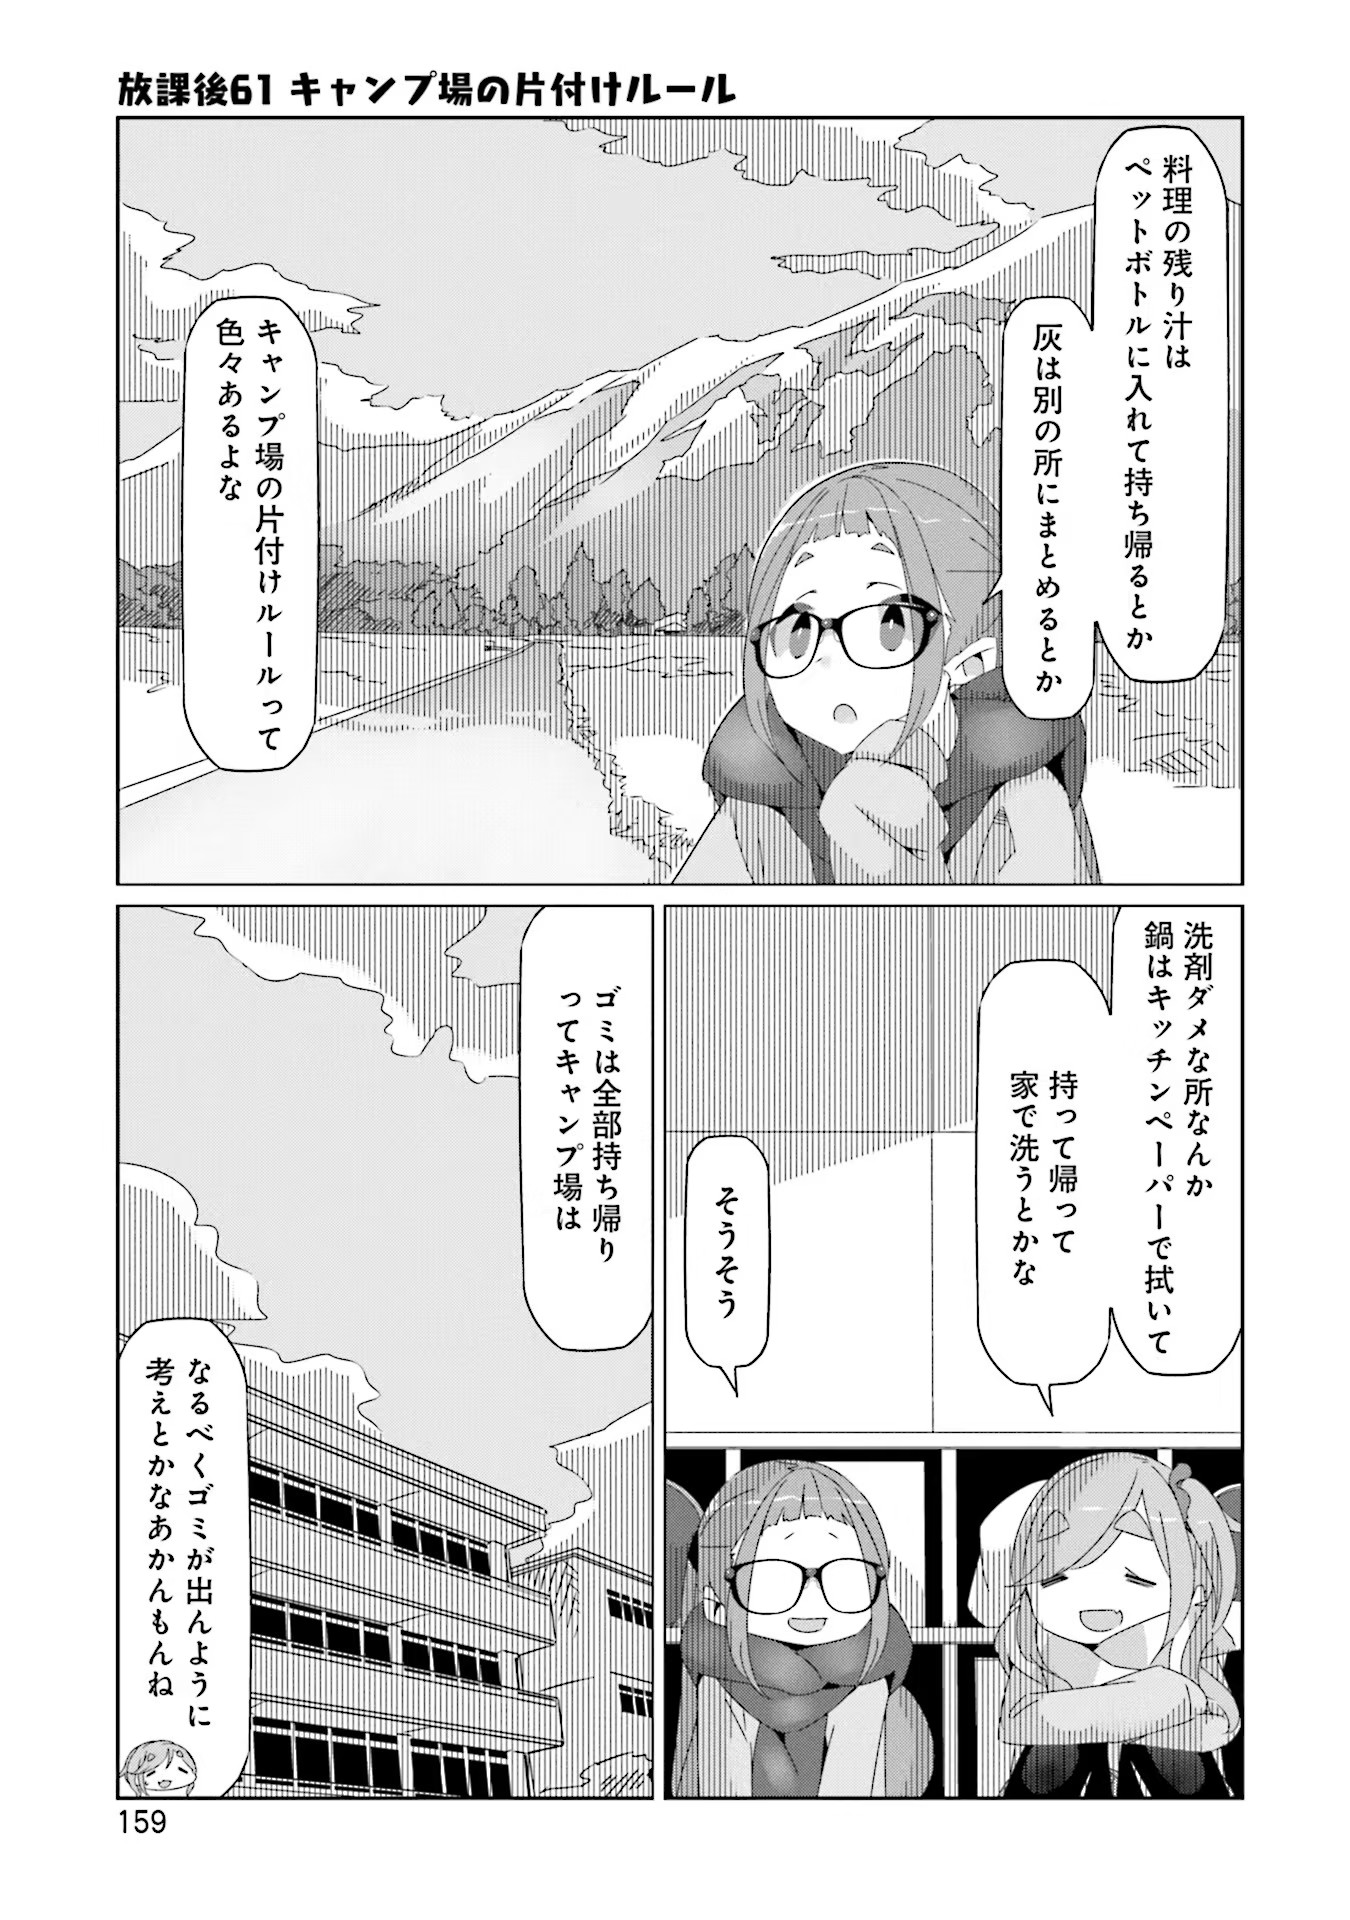 Yuru Camp - Chapter 46.5 - Page 1